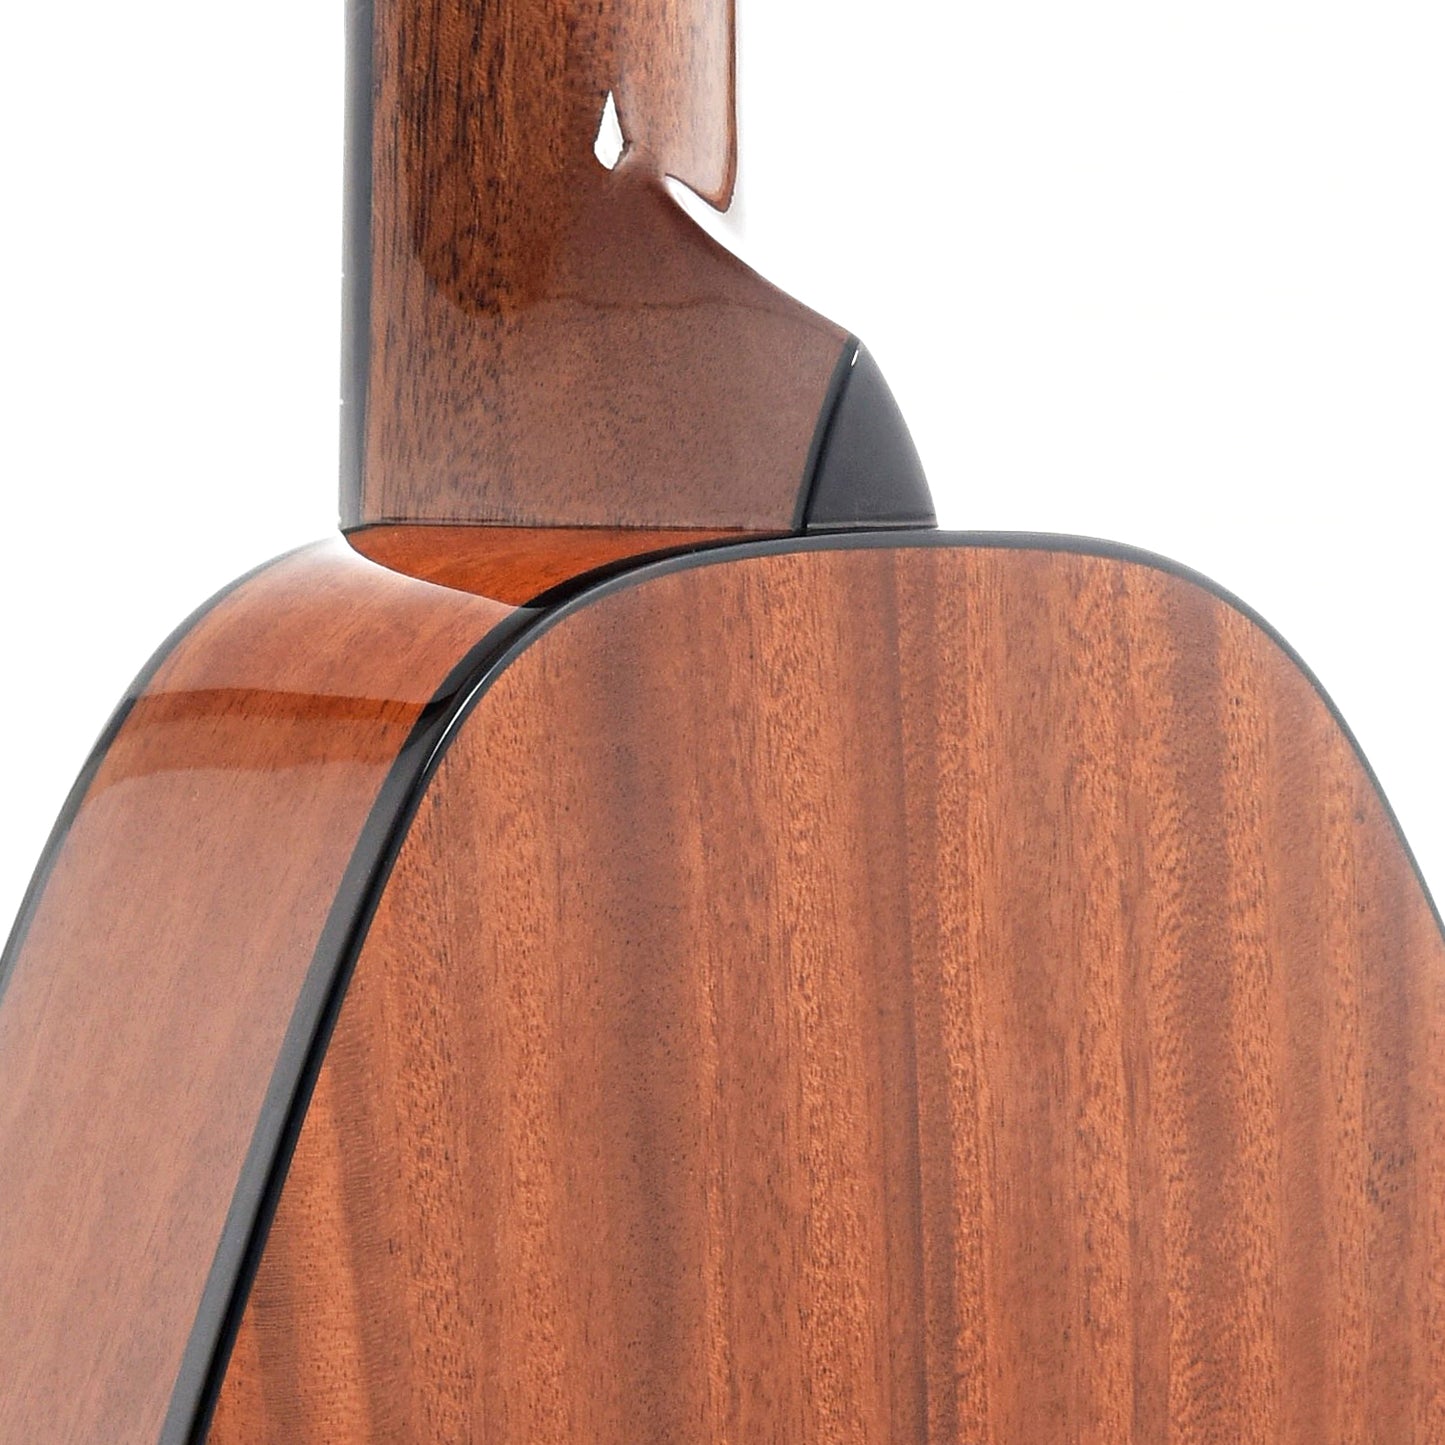 Image 9 of Romero Creations Daniel Ho 6-String Steel String Guitar - SKU# DHO6SSM : Product Type Flat-top Guitars : Elderly Instruments